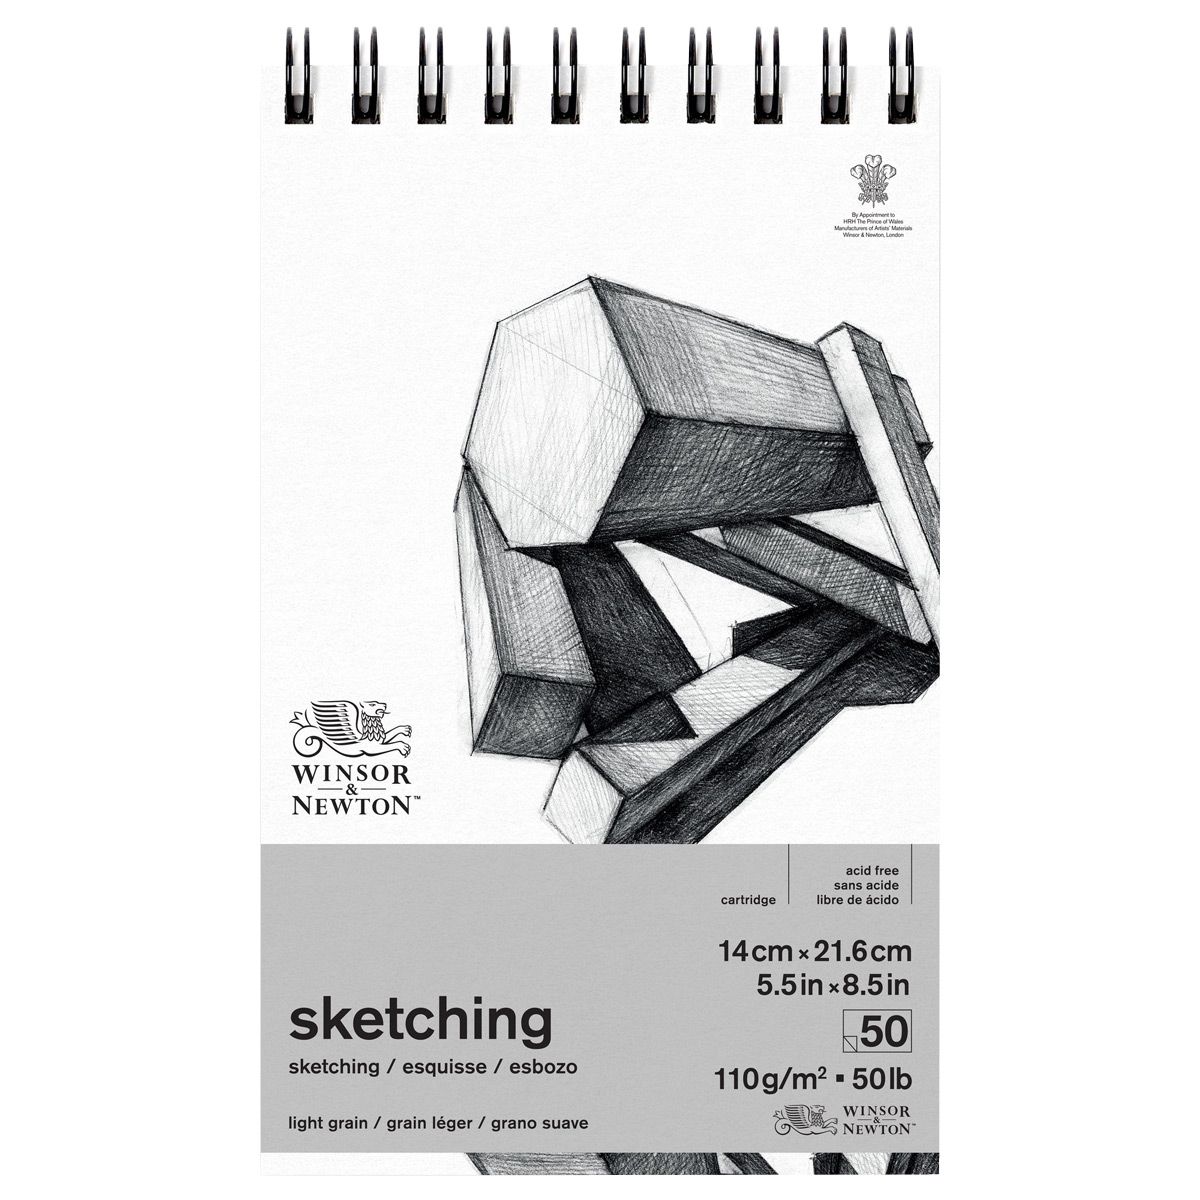 Winsor & Newton Sketching Pad, 5.5 inch x 8.5 inch